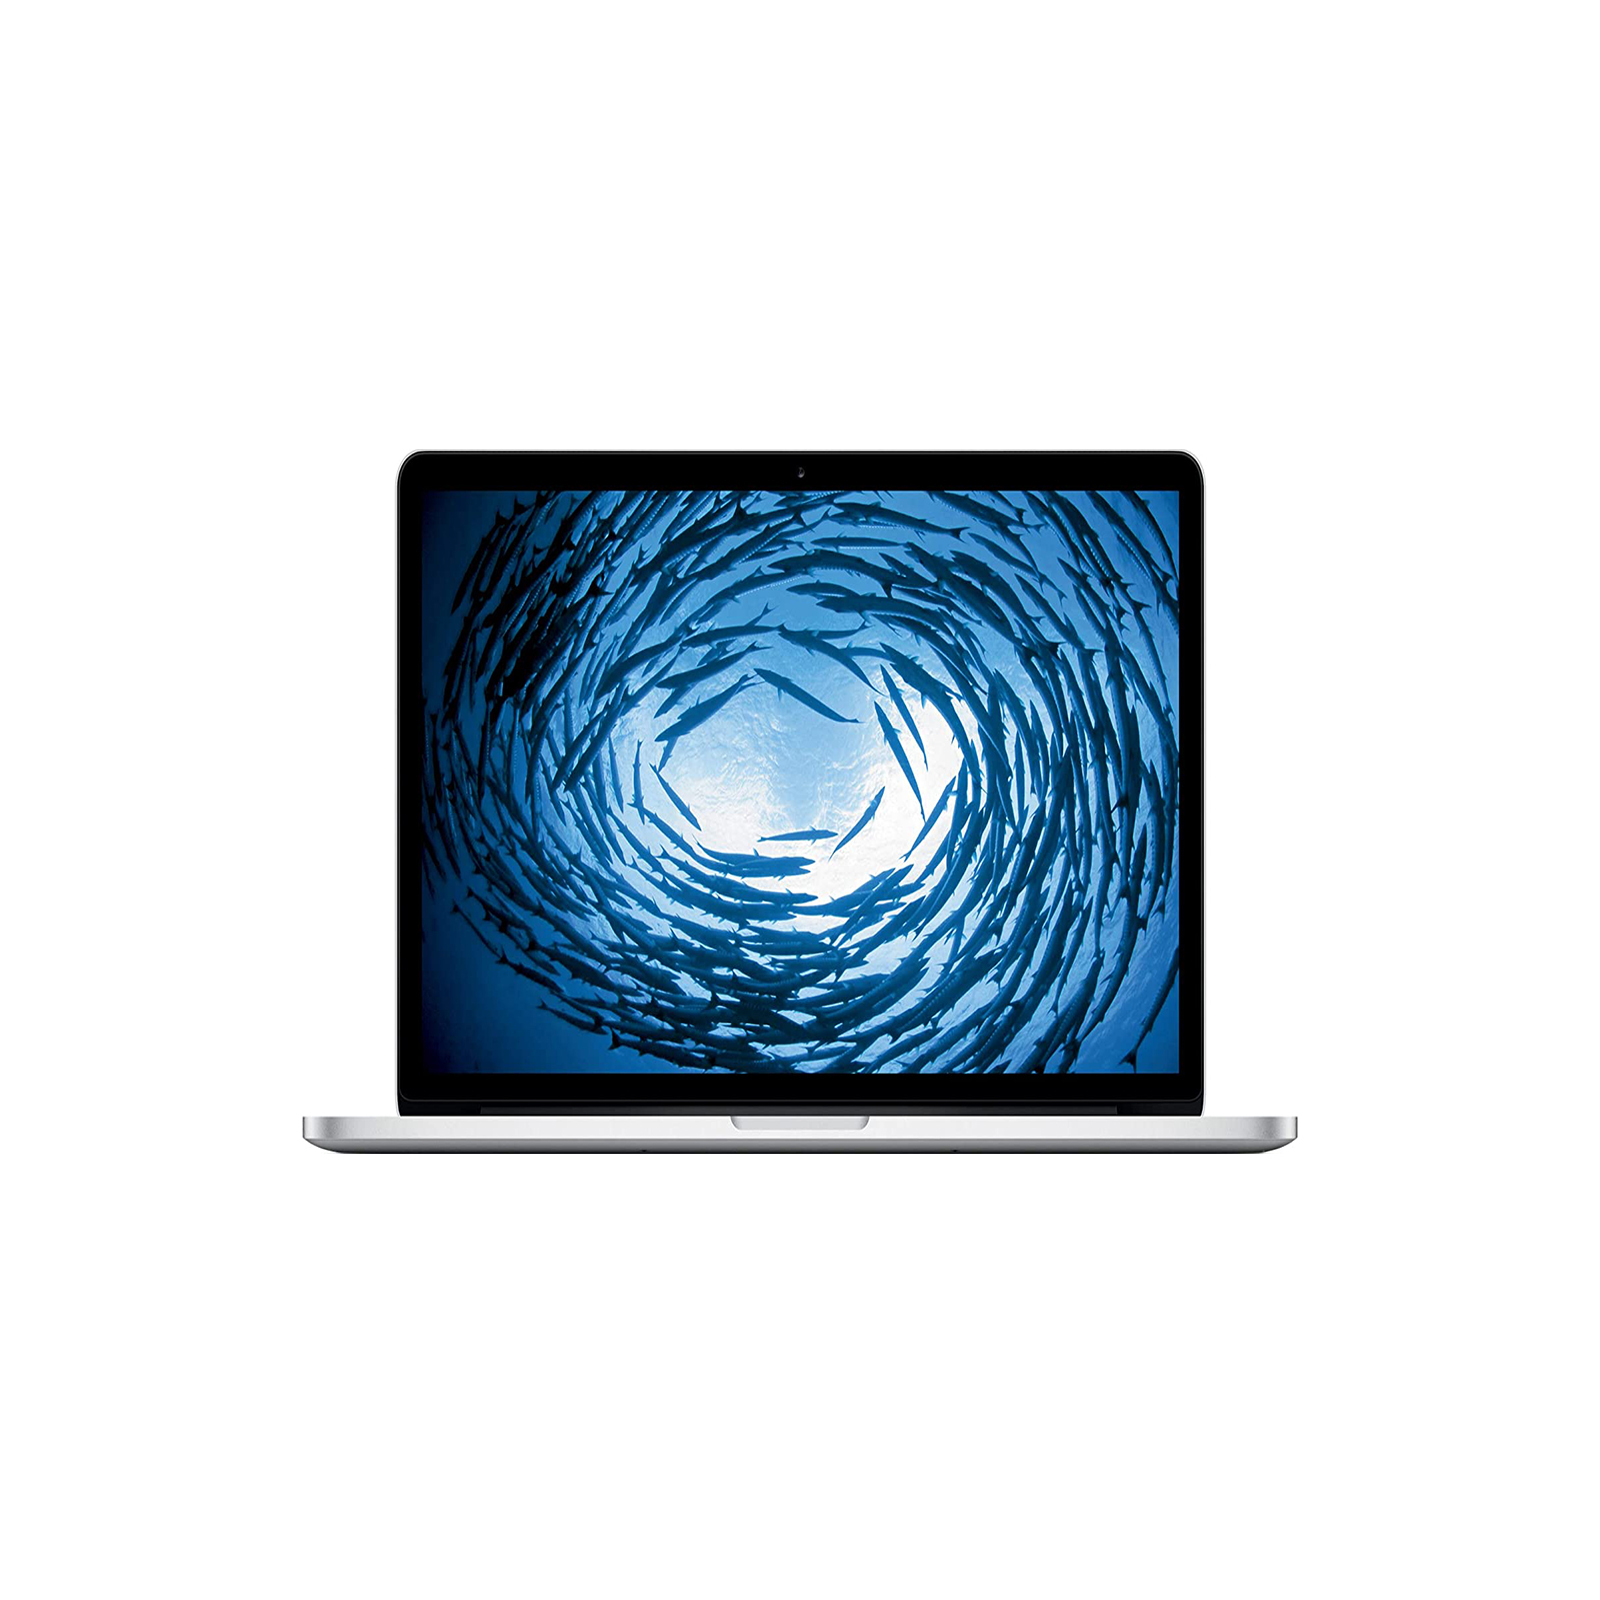 MacBook Pro (13-inch, Late 2013) Core i5 2.4 GHz 8GB RAM 256GB SSD